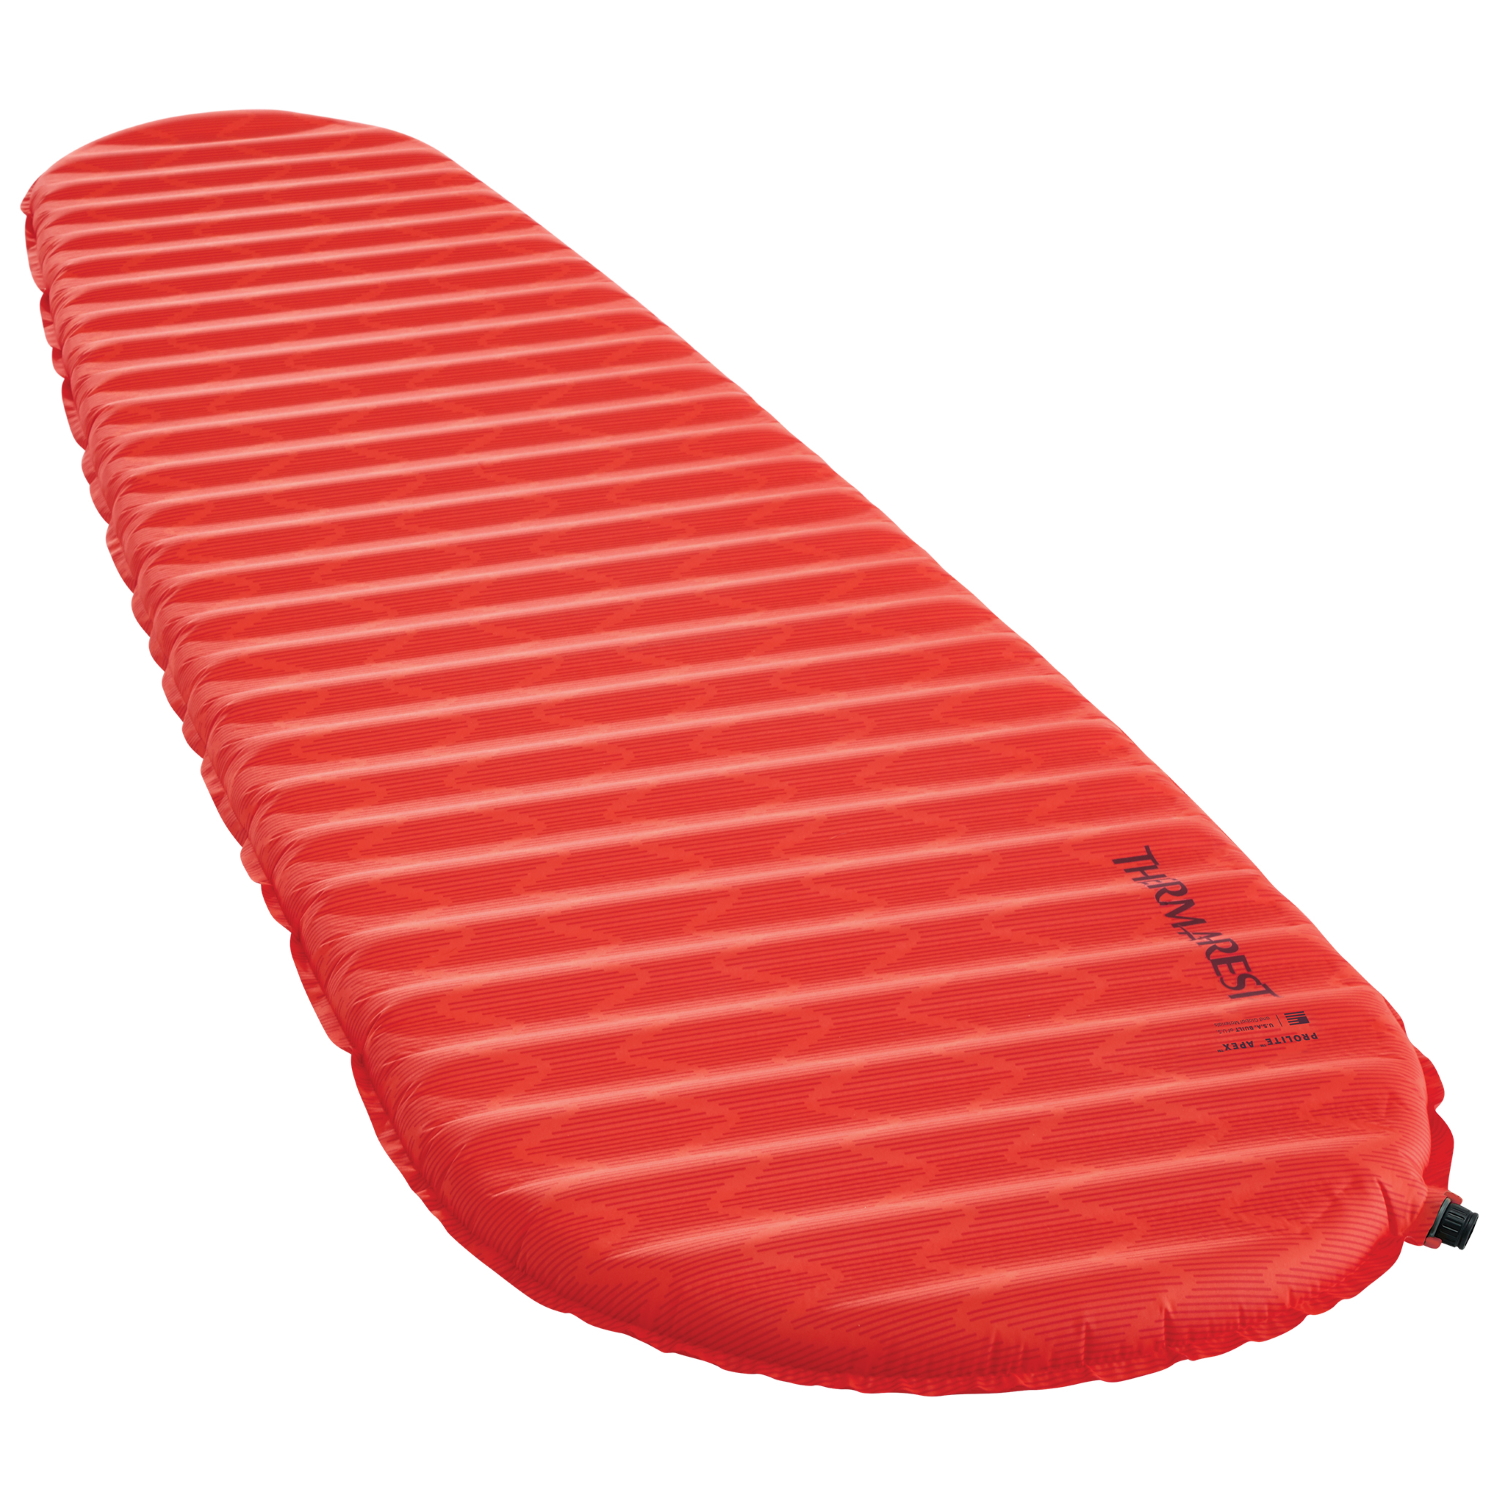 Image of Therm-a-Rest ProLite Apex Mattress Sleeping Pad - Regular Wide - Heat Wave